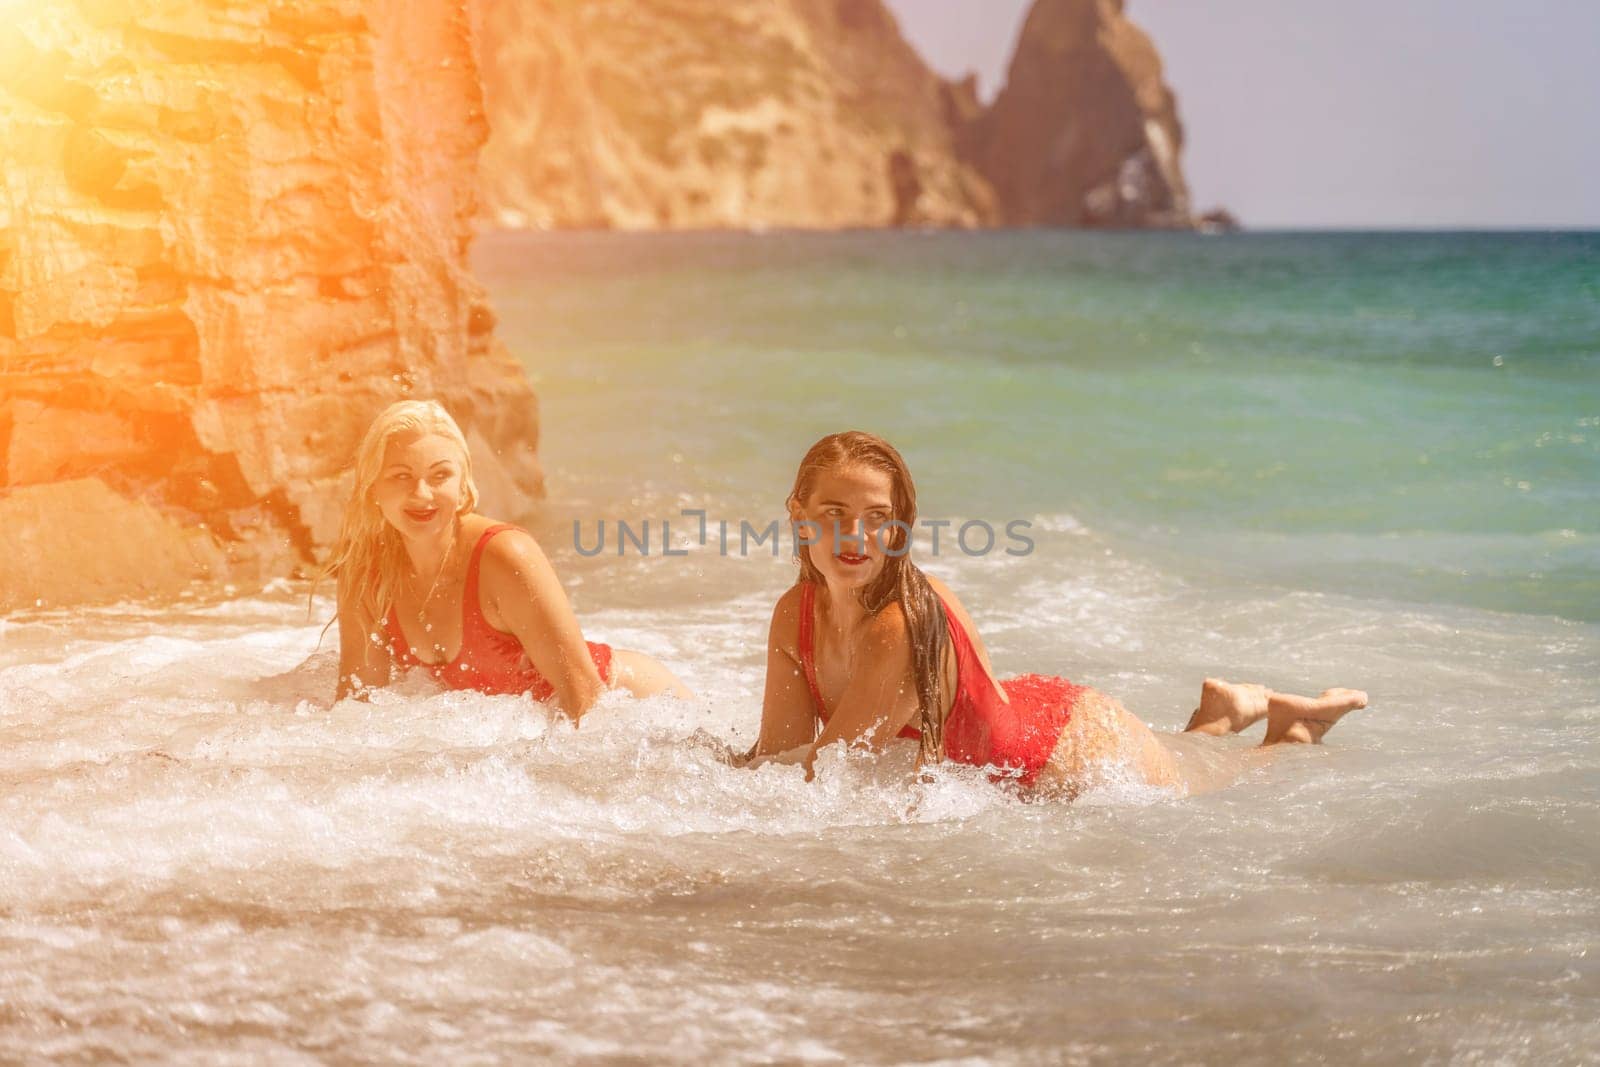 Women ocean play. Seaside, beach daytime, enjoying beach fun. Two women in red swimsuits enjoying themselves in the ocean waves. by Matiunina